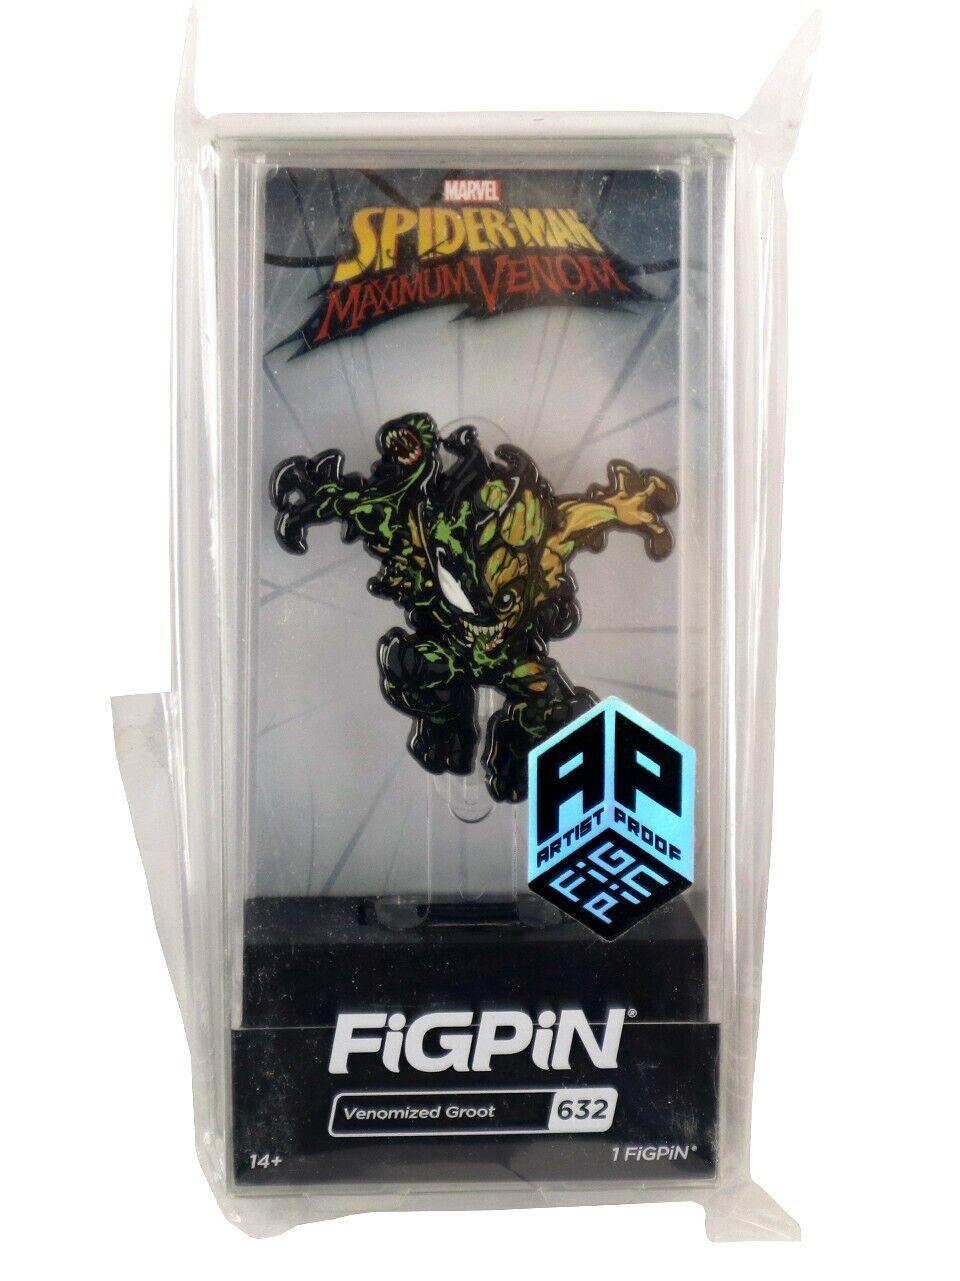 Figpin Venomized Groot #632 Pin Artist Proof Spider-Man Maximum Venom